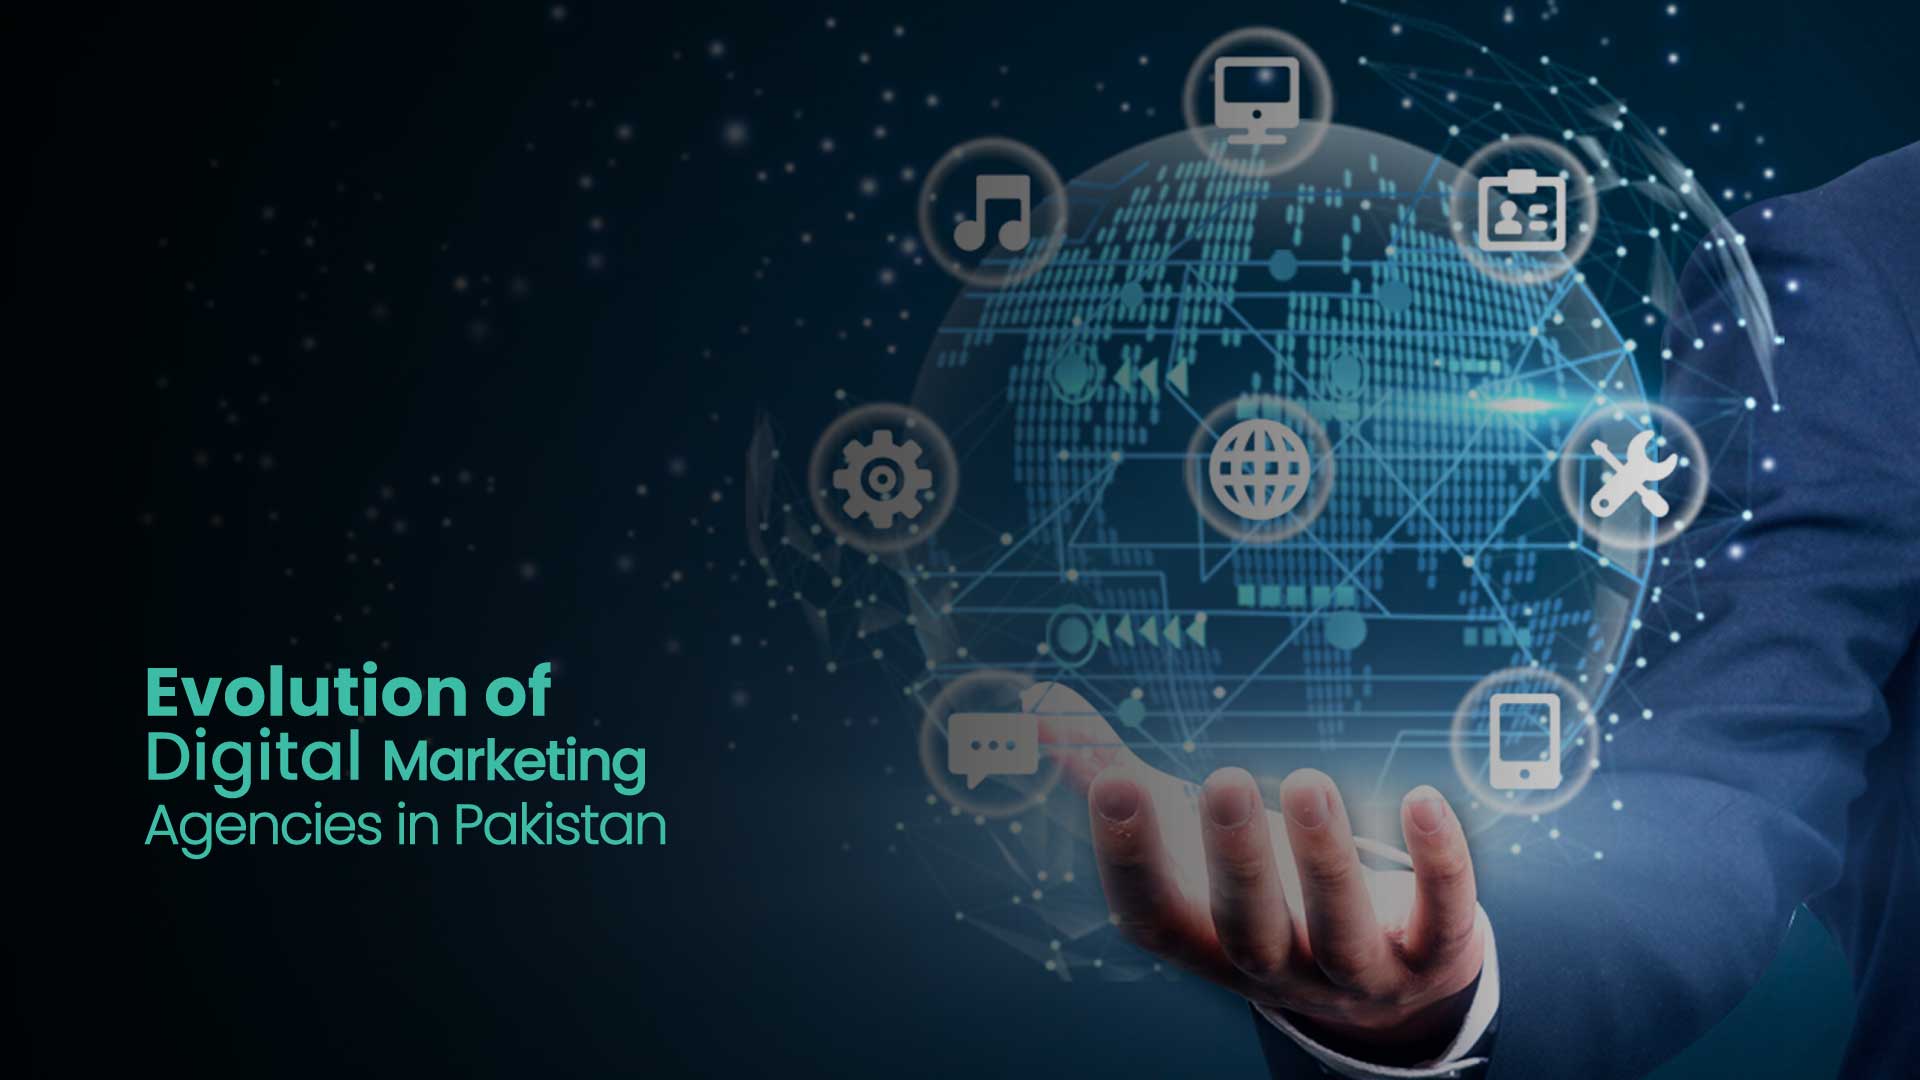 Digital Marketing Agencies in Pakistan, digital agencies in Pakistan